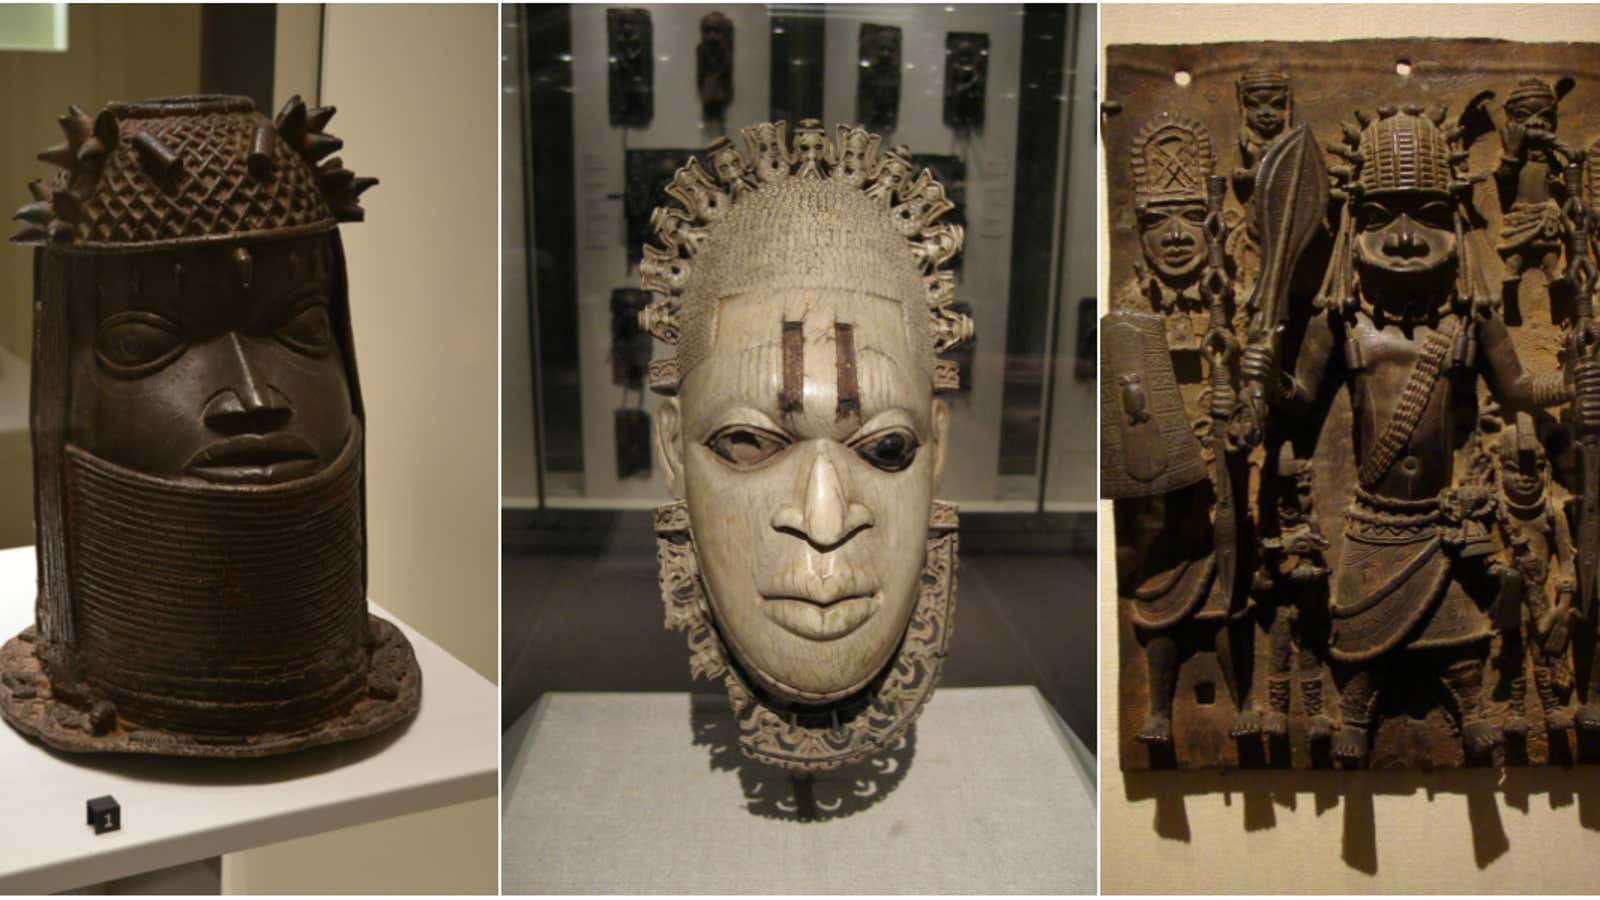 Examples of Benin kingdom art around the world